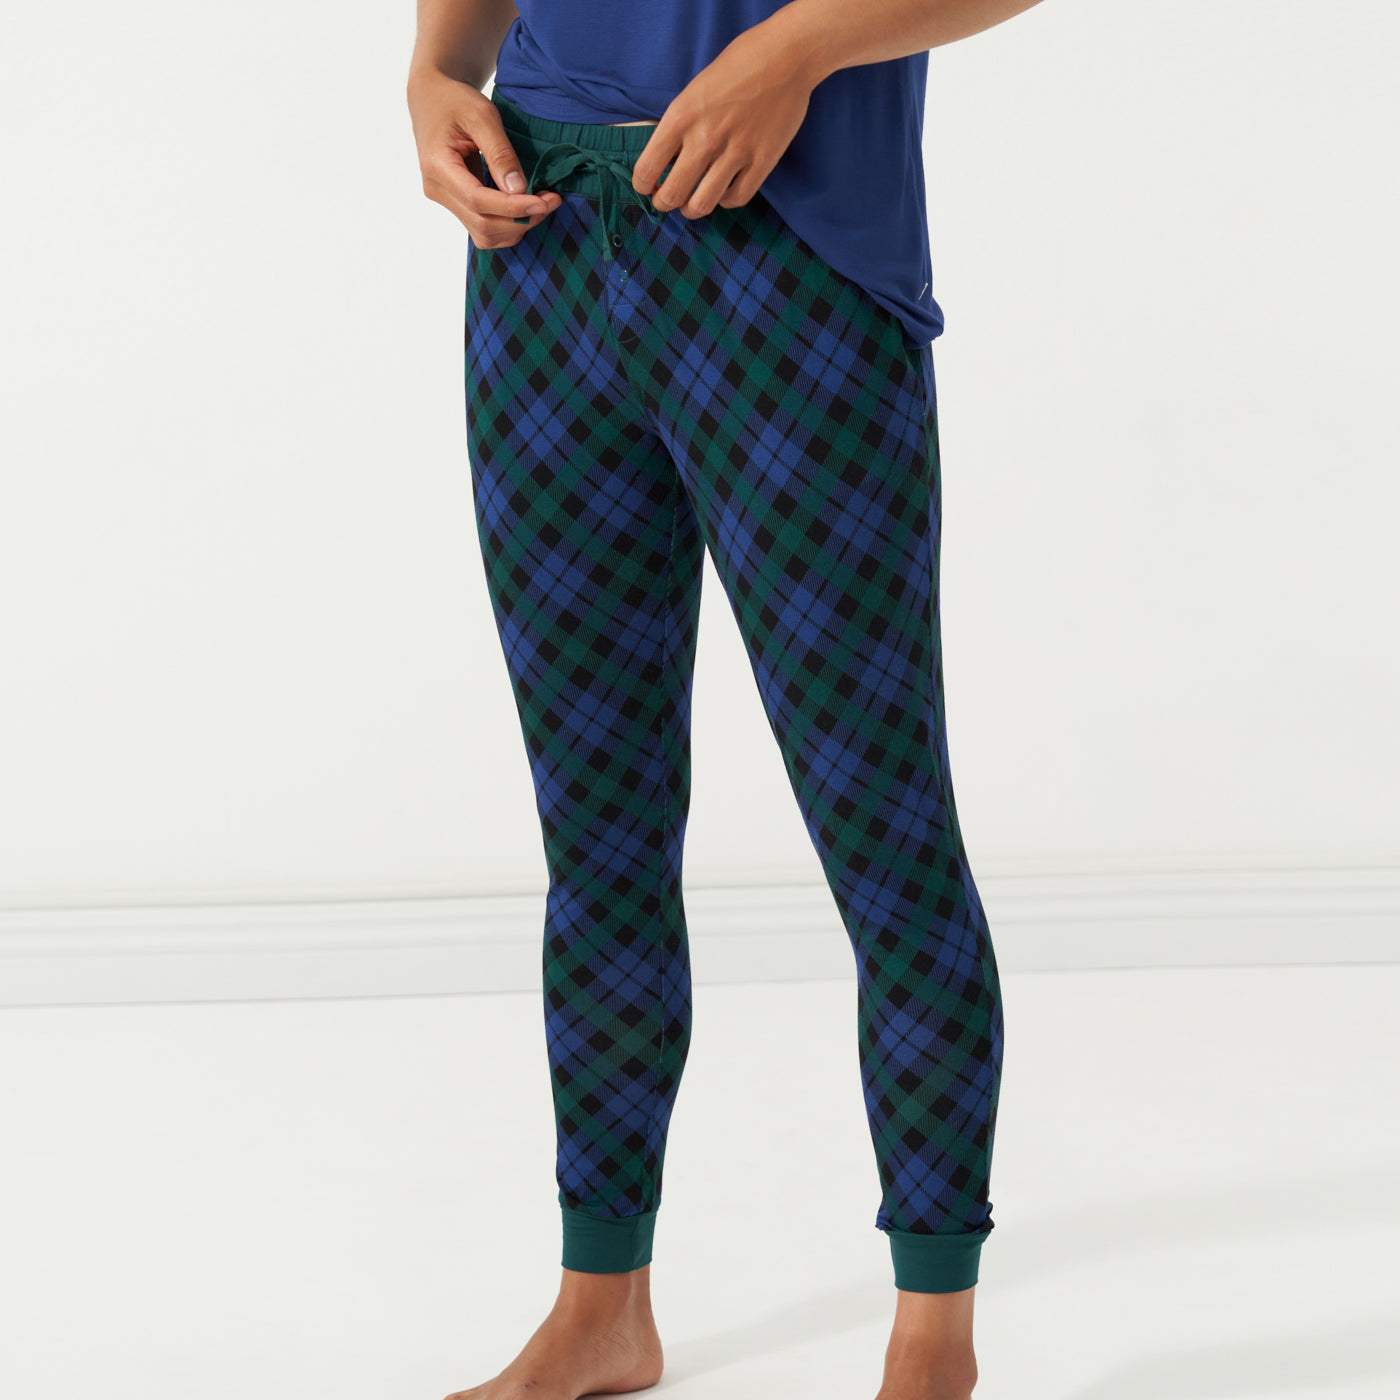 Comfortable wholesale pajama pants In Various Designs - Alibaba.com